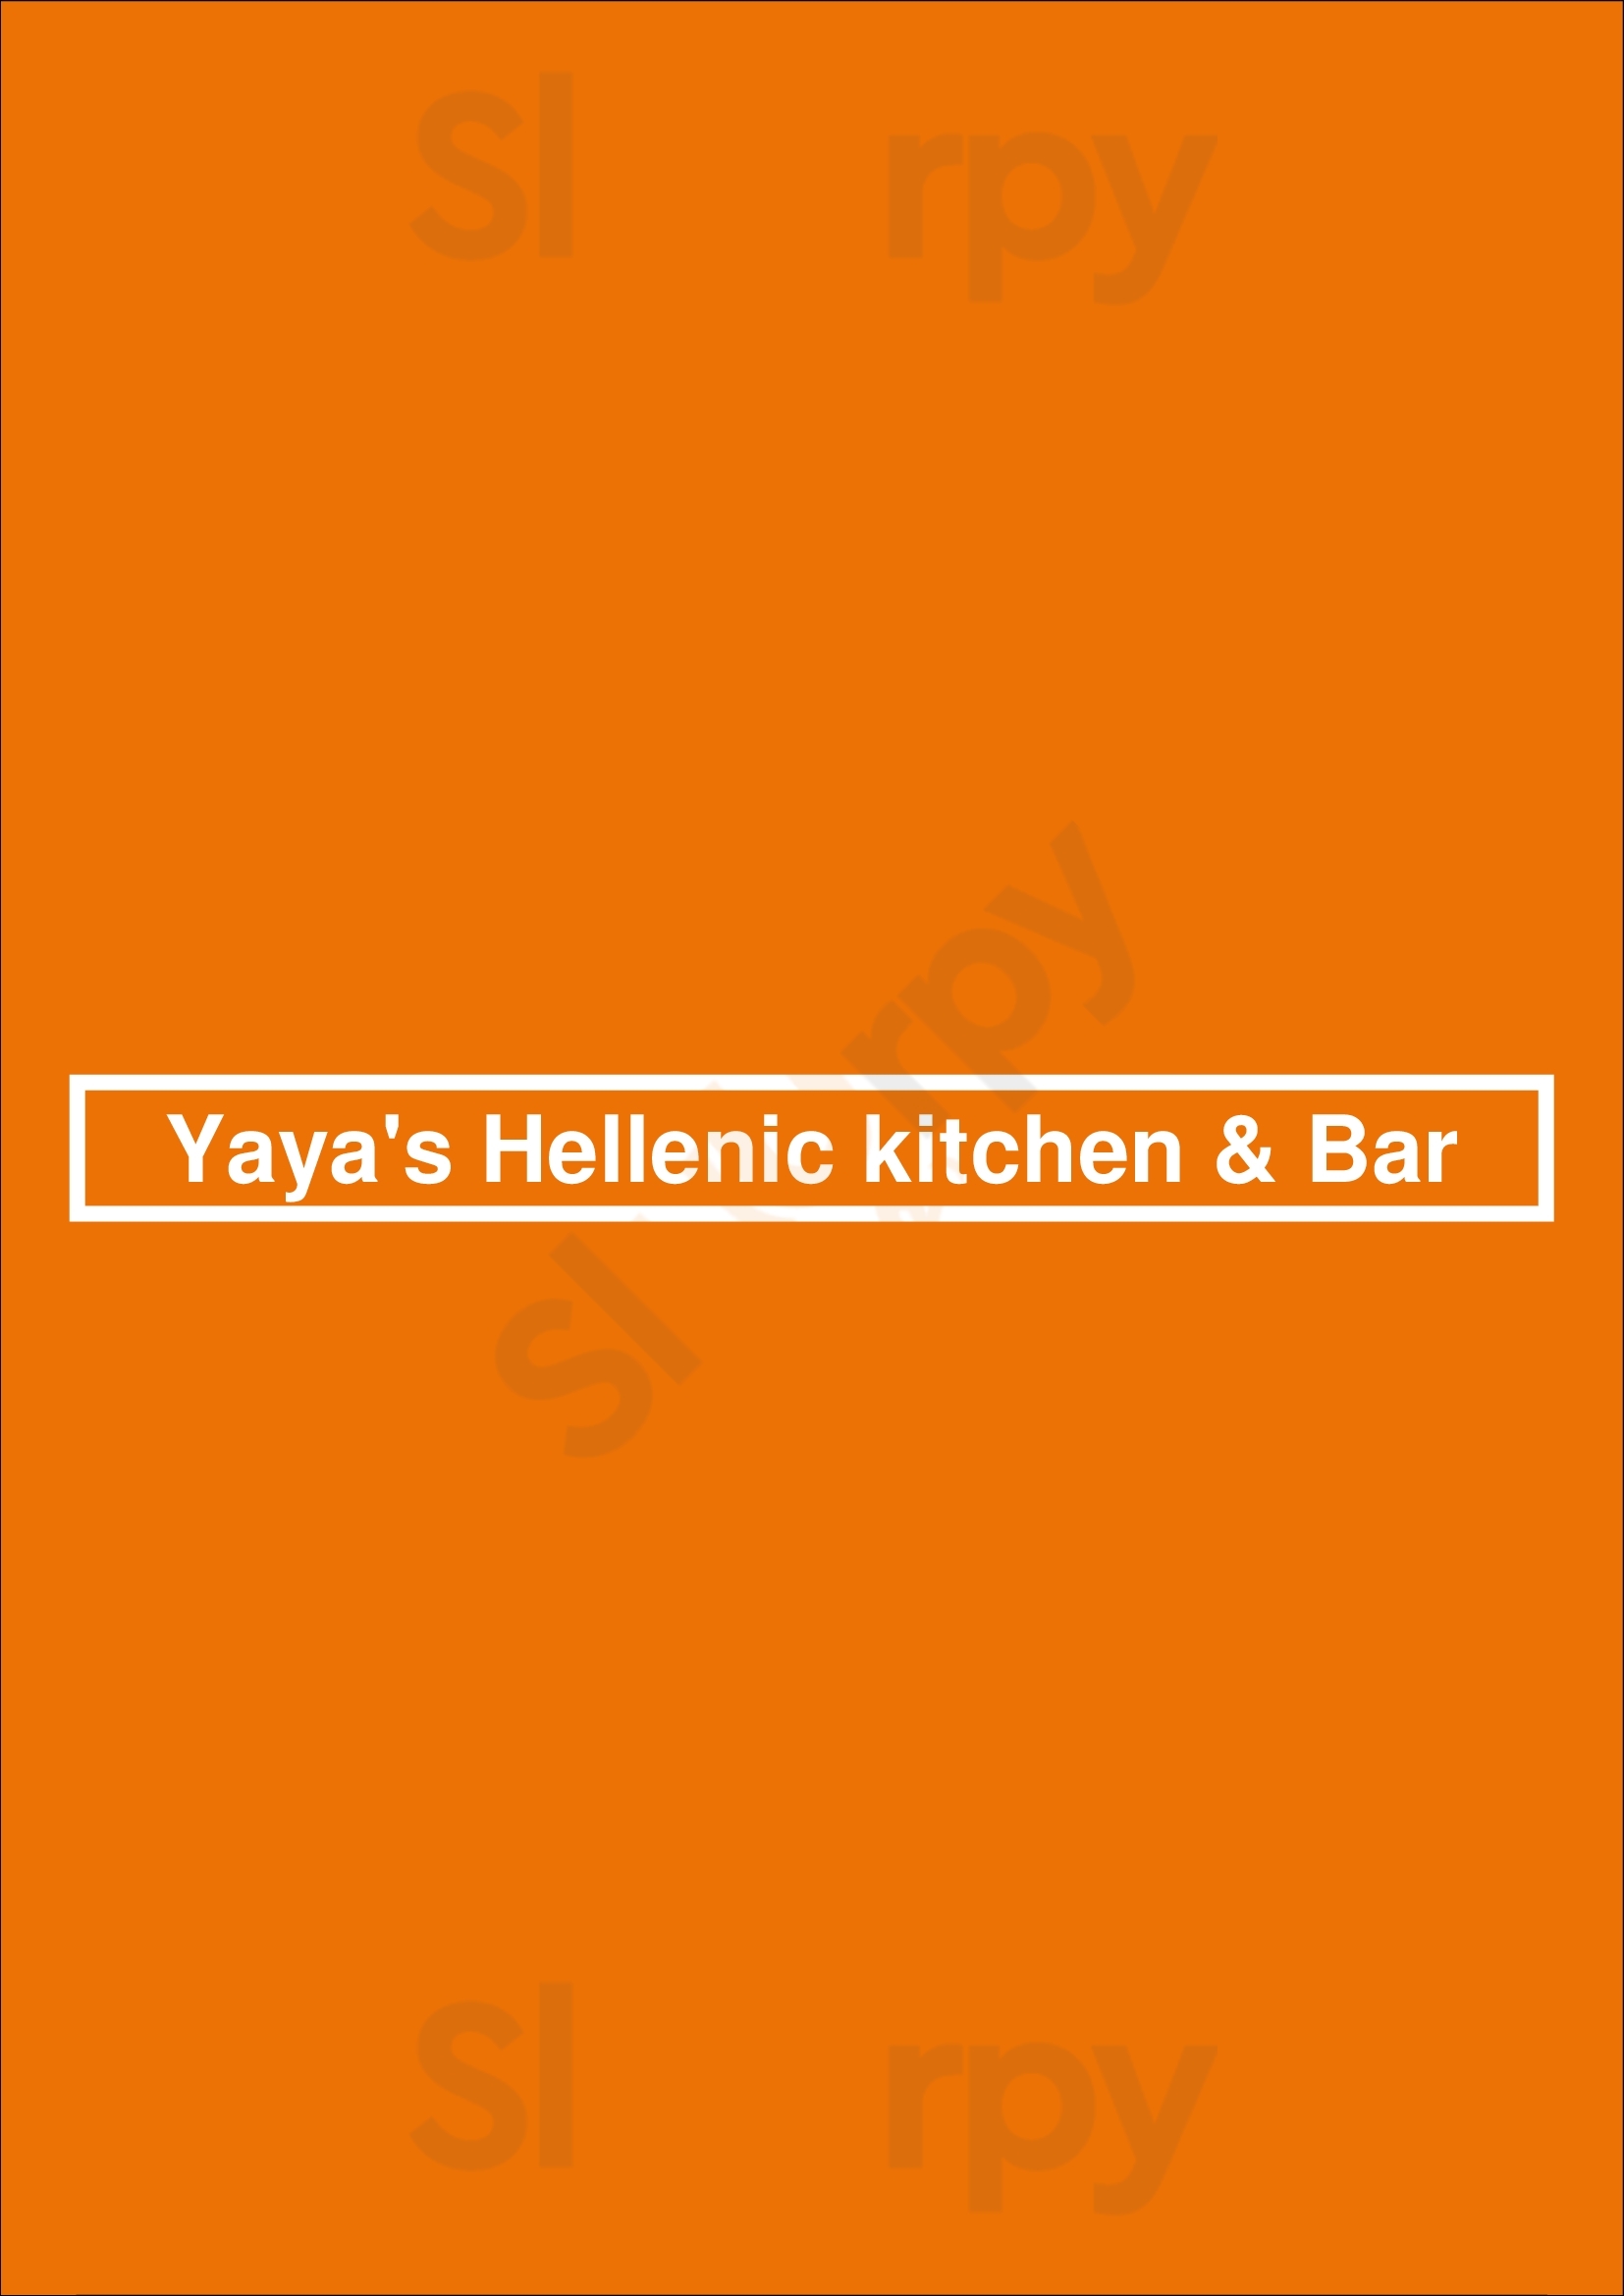 Yaya's Hellenic Kitchen & Bar Cairns Menu - 1